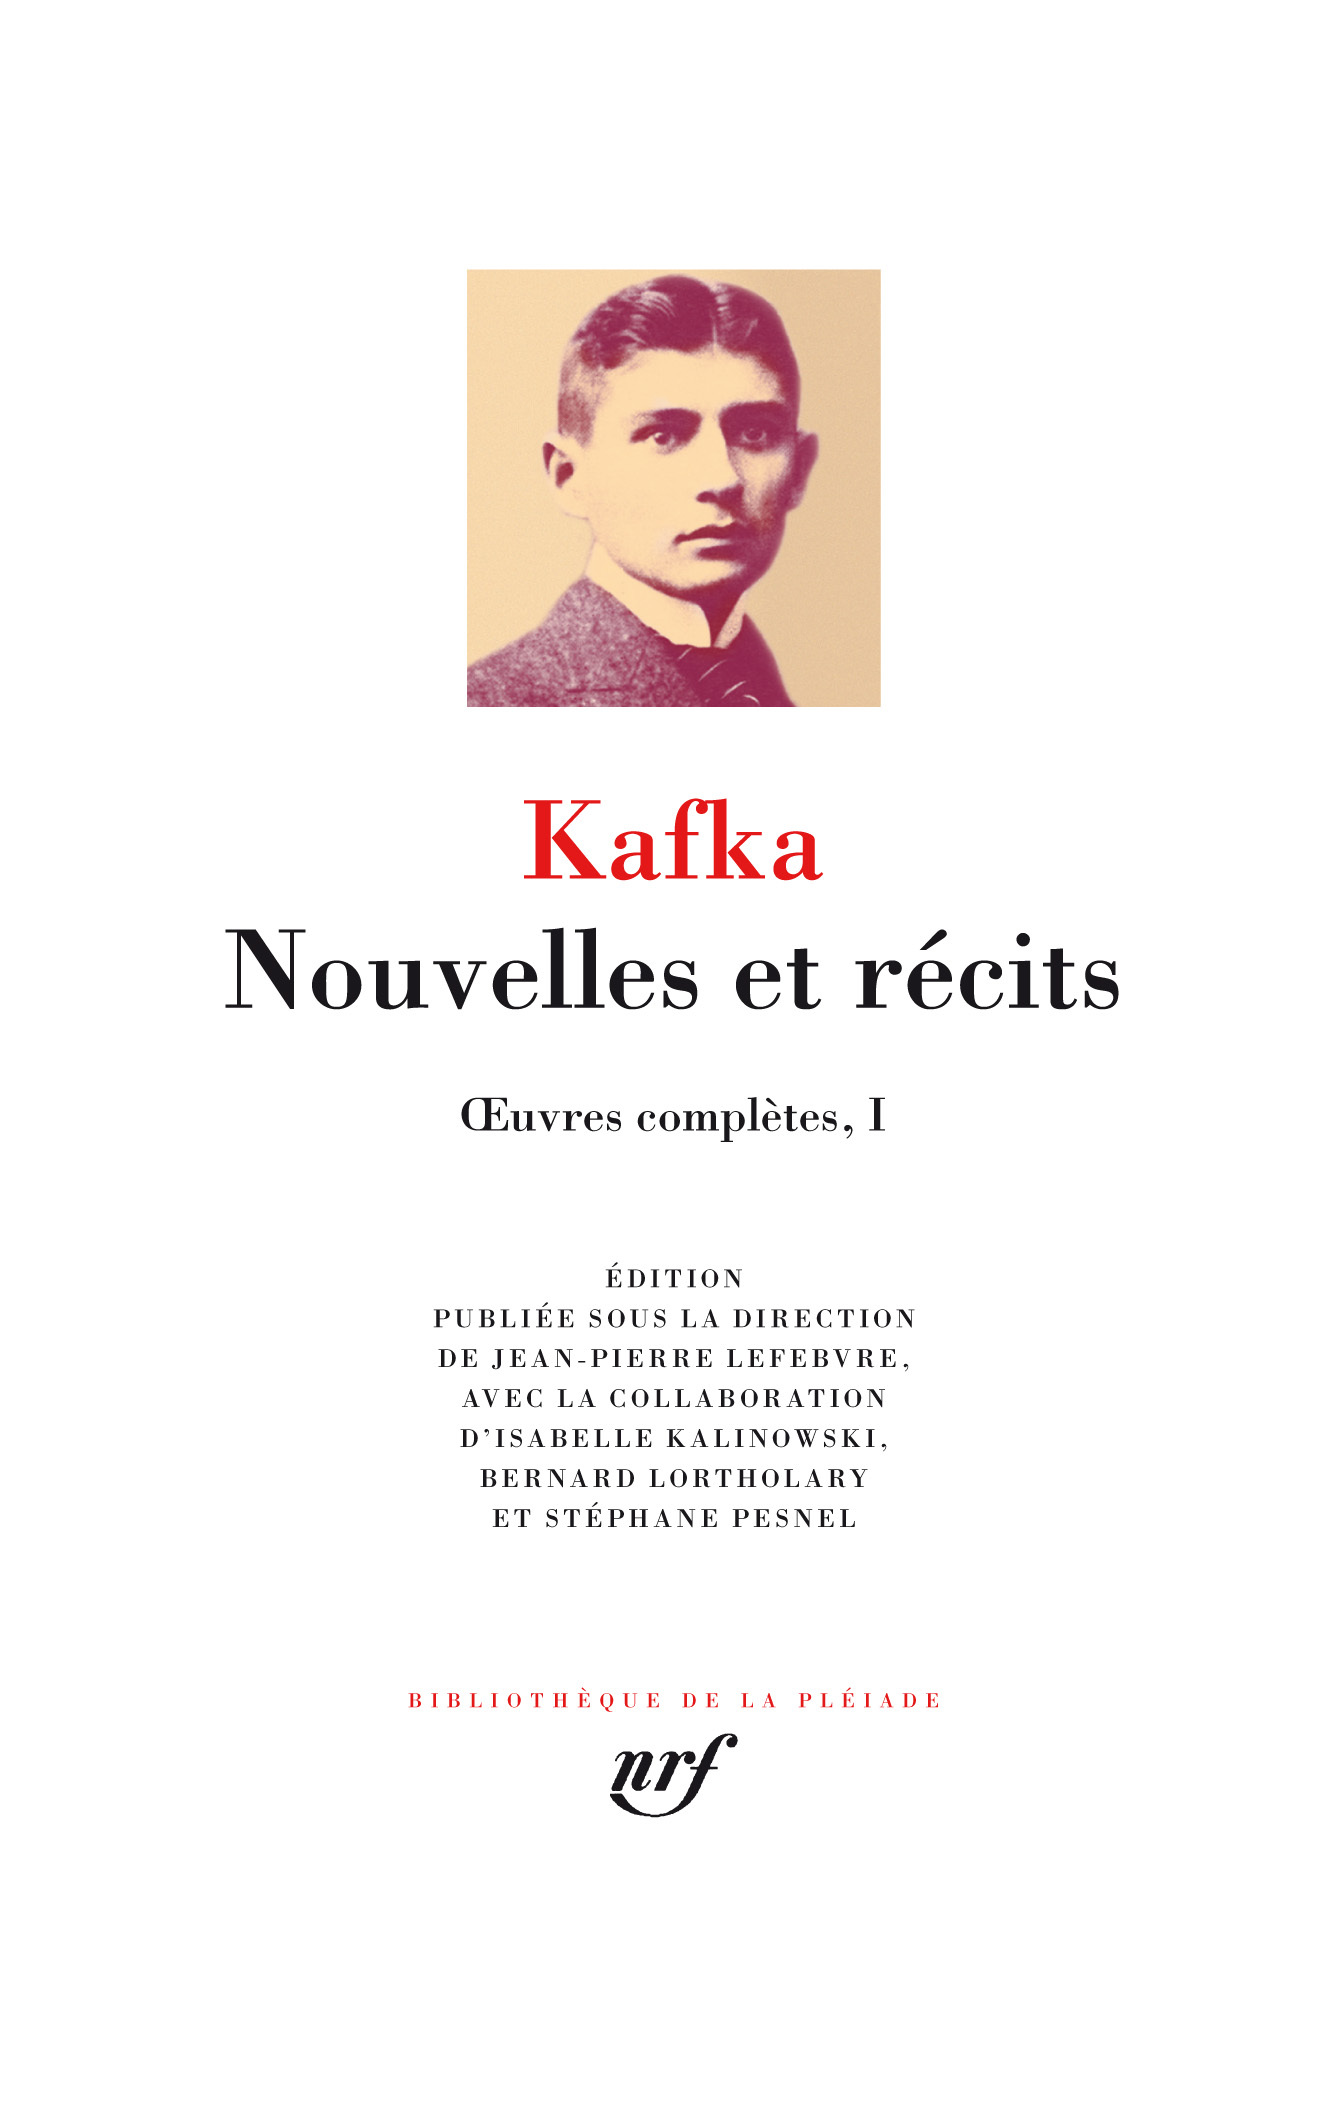 Nouvelles et récits, OEUVRES COMPLETES I (9782070144310-front-cover)